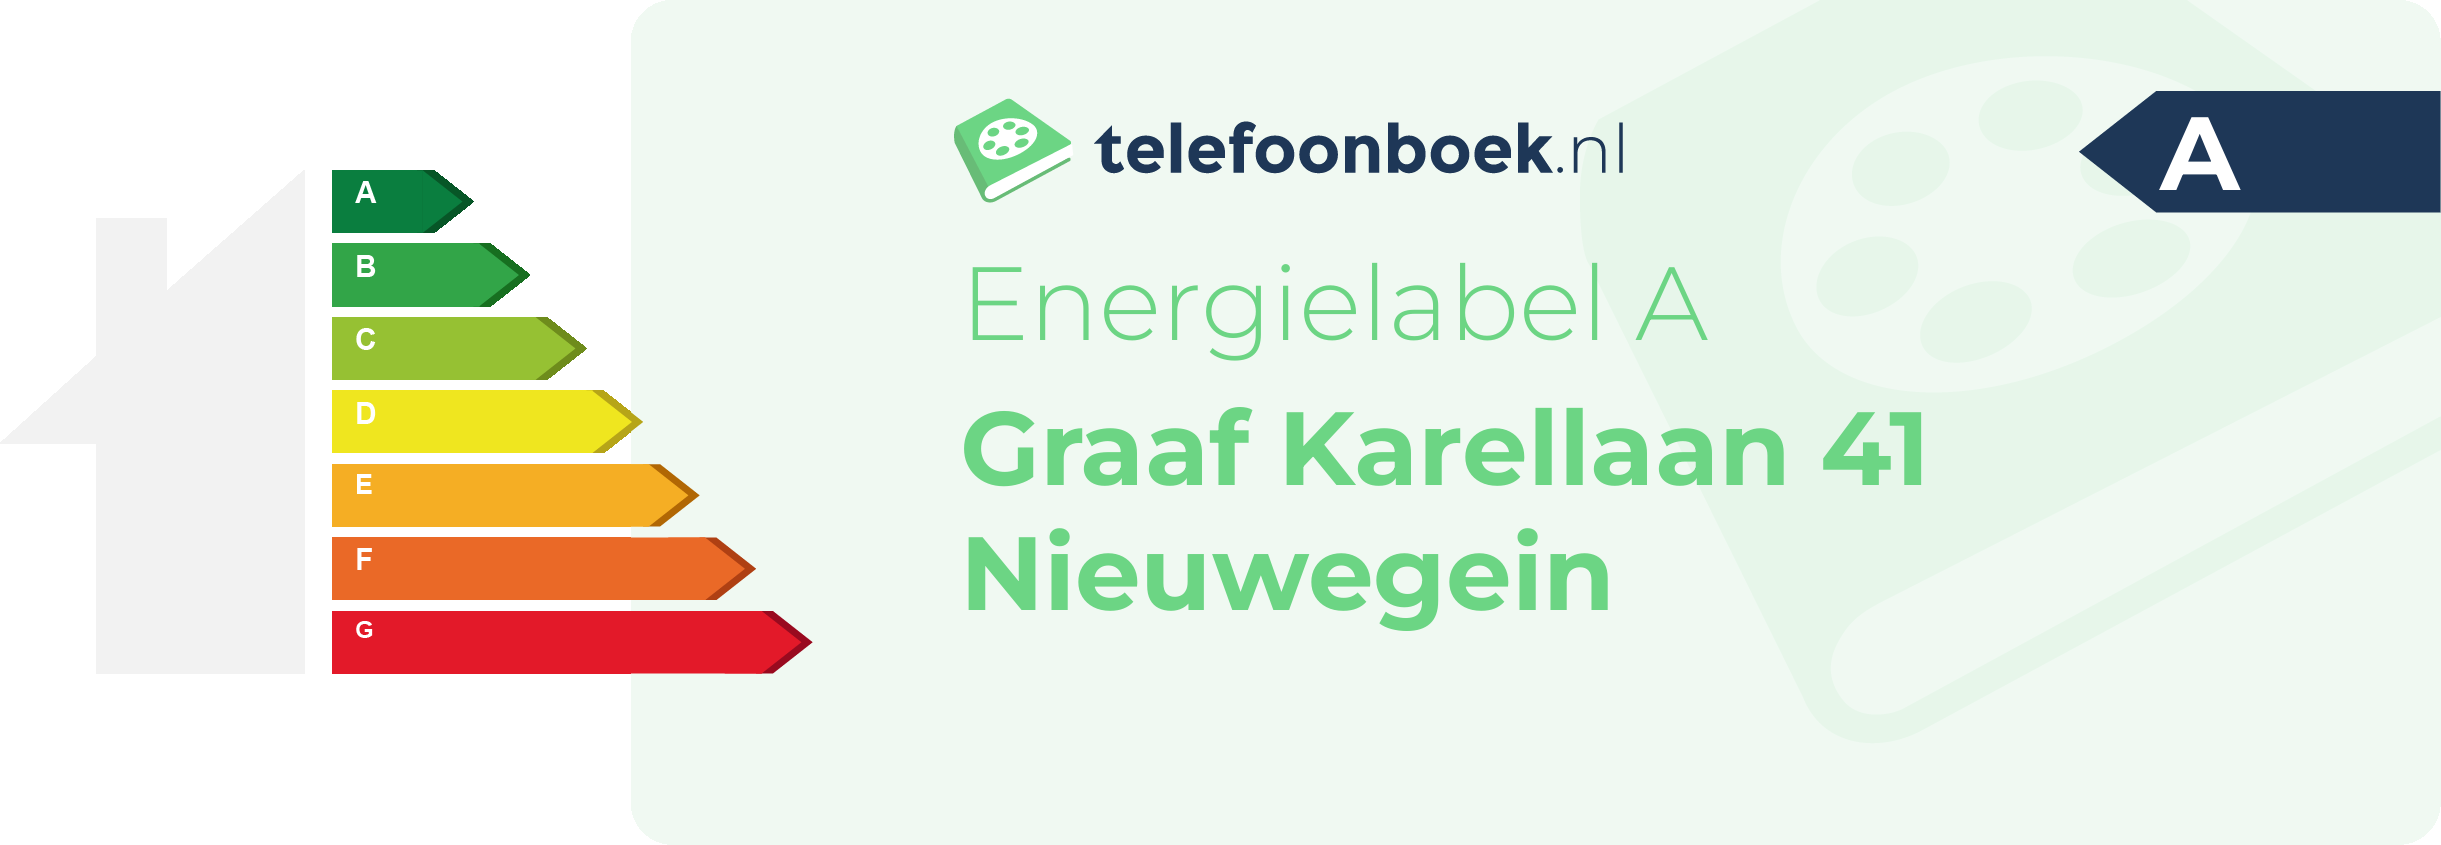 Energielabel Graaf Karellaan 41 Nieuwegein